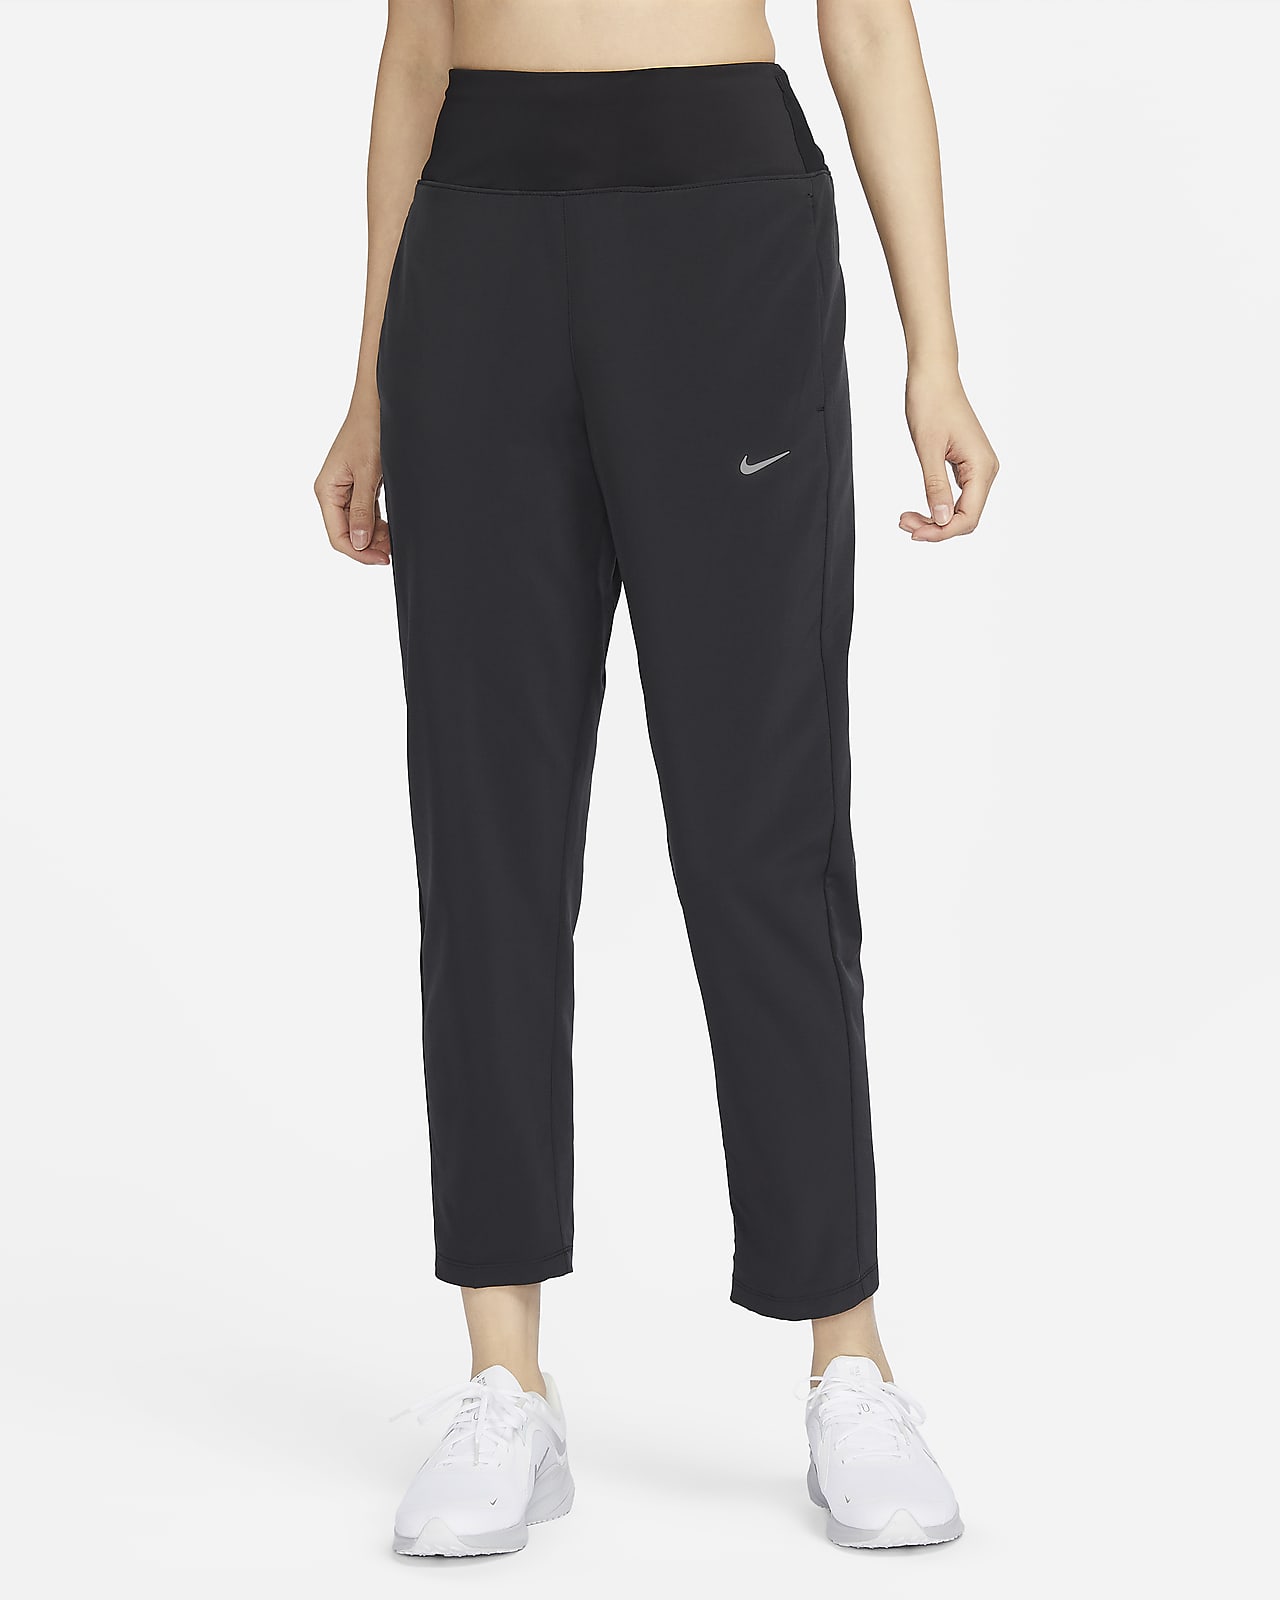 Nike Dri-FIT Swift Women's Mid-Rise Running Pants.